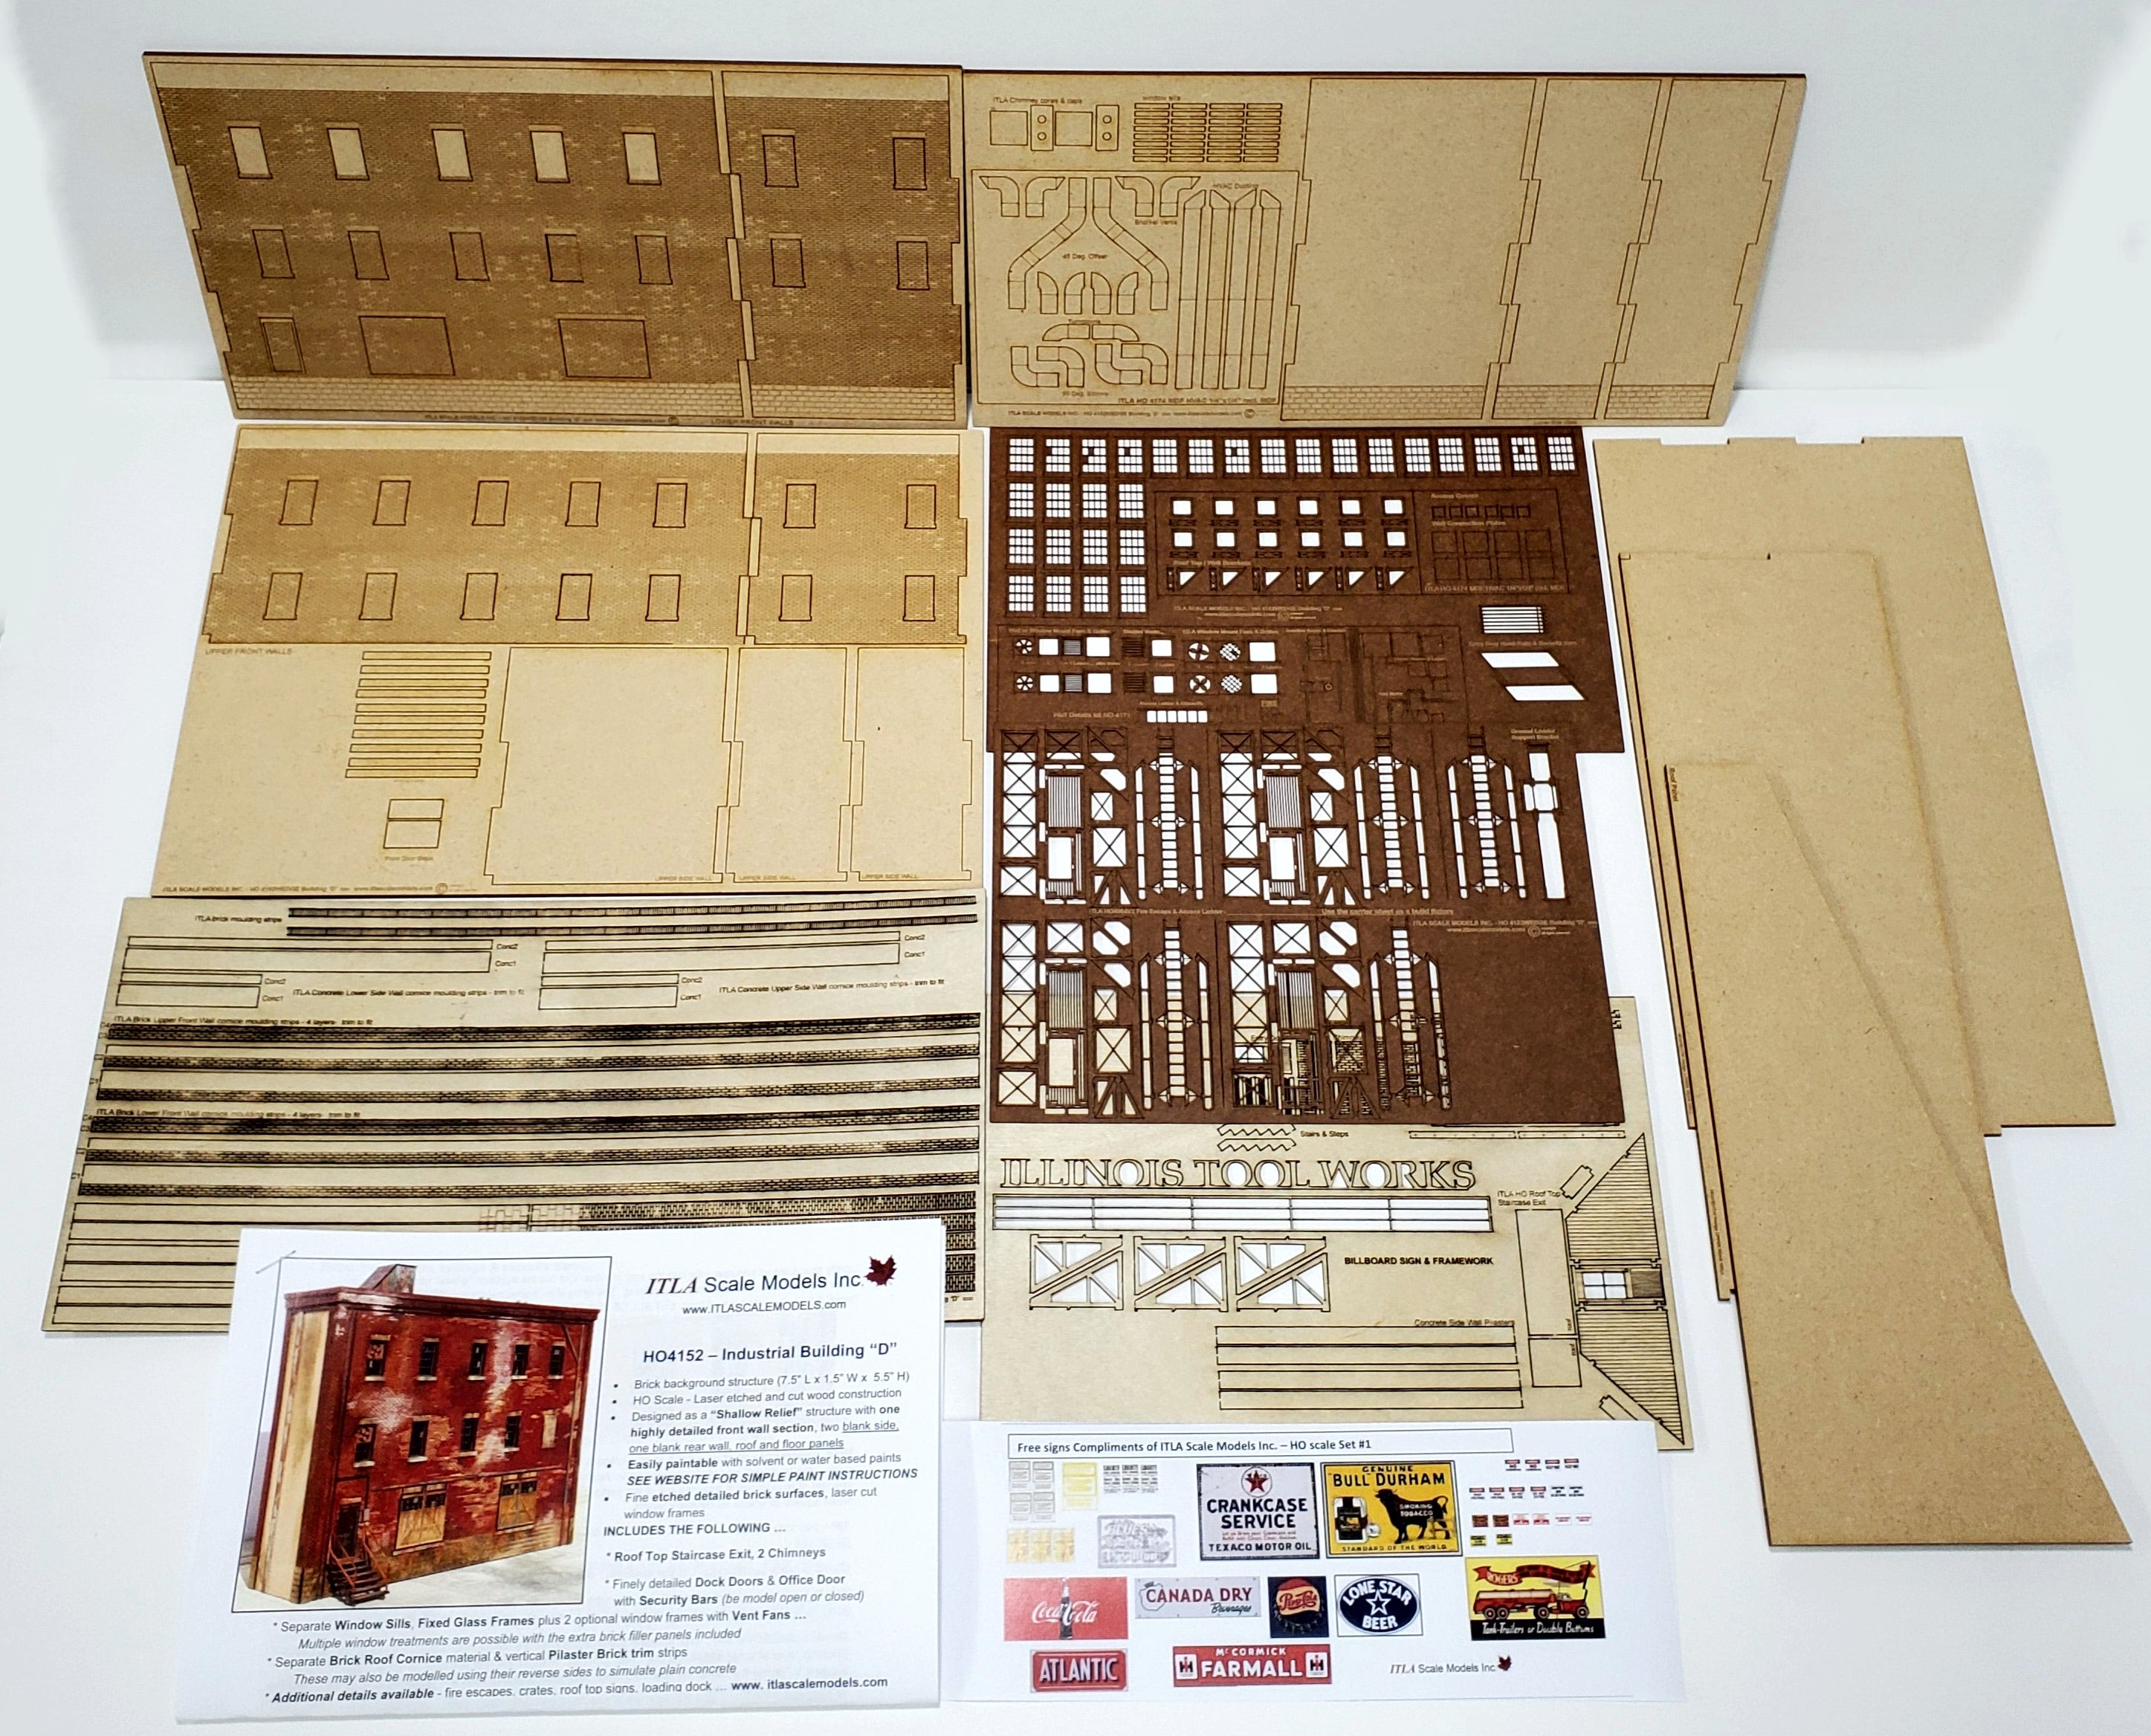 HO Building "D" Bundle Kit - Wedge Shaped Background Structure - ITLA